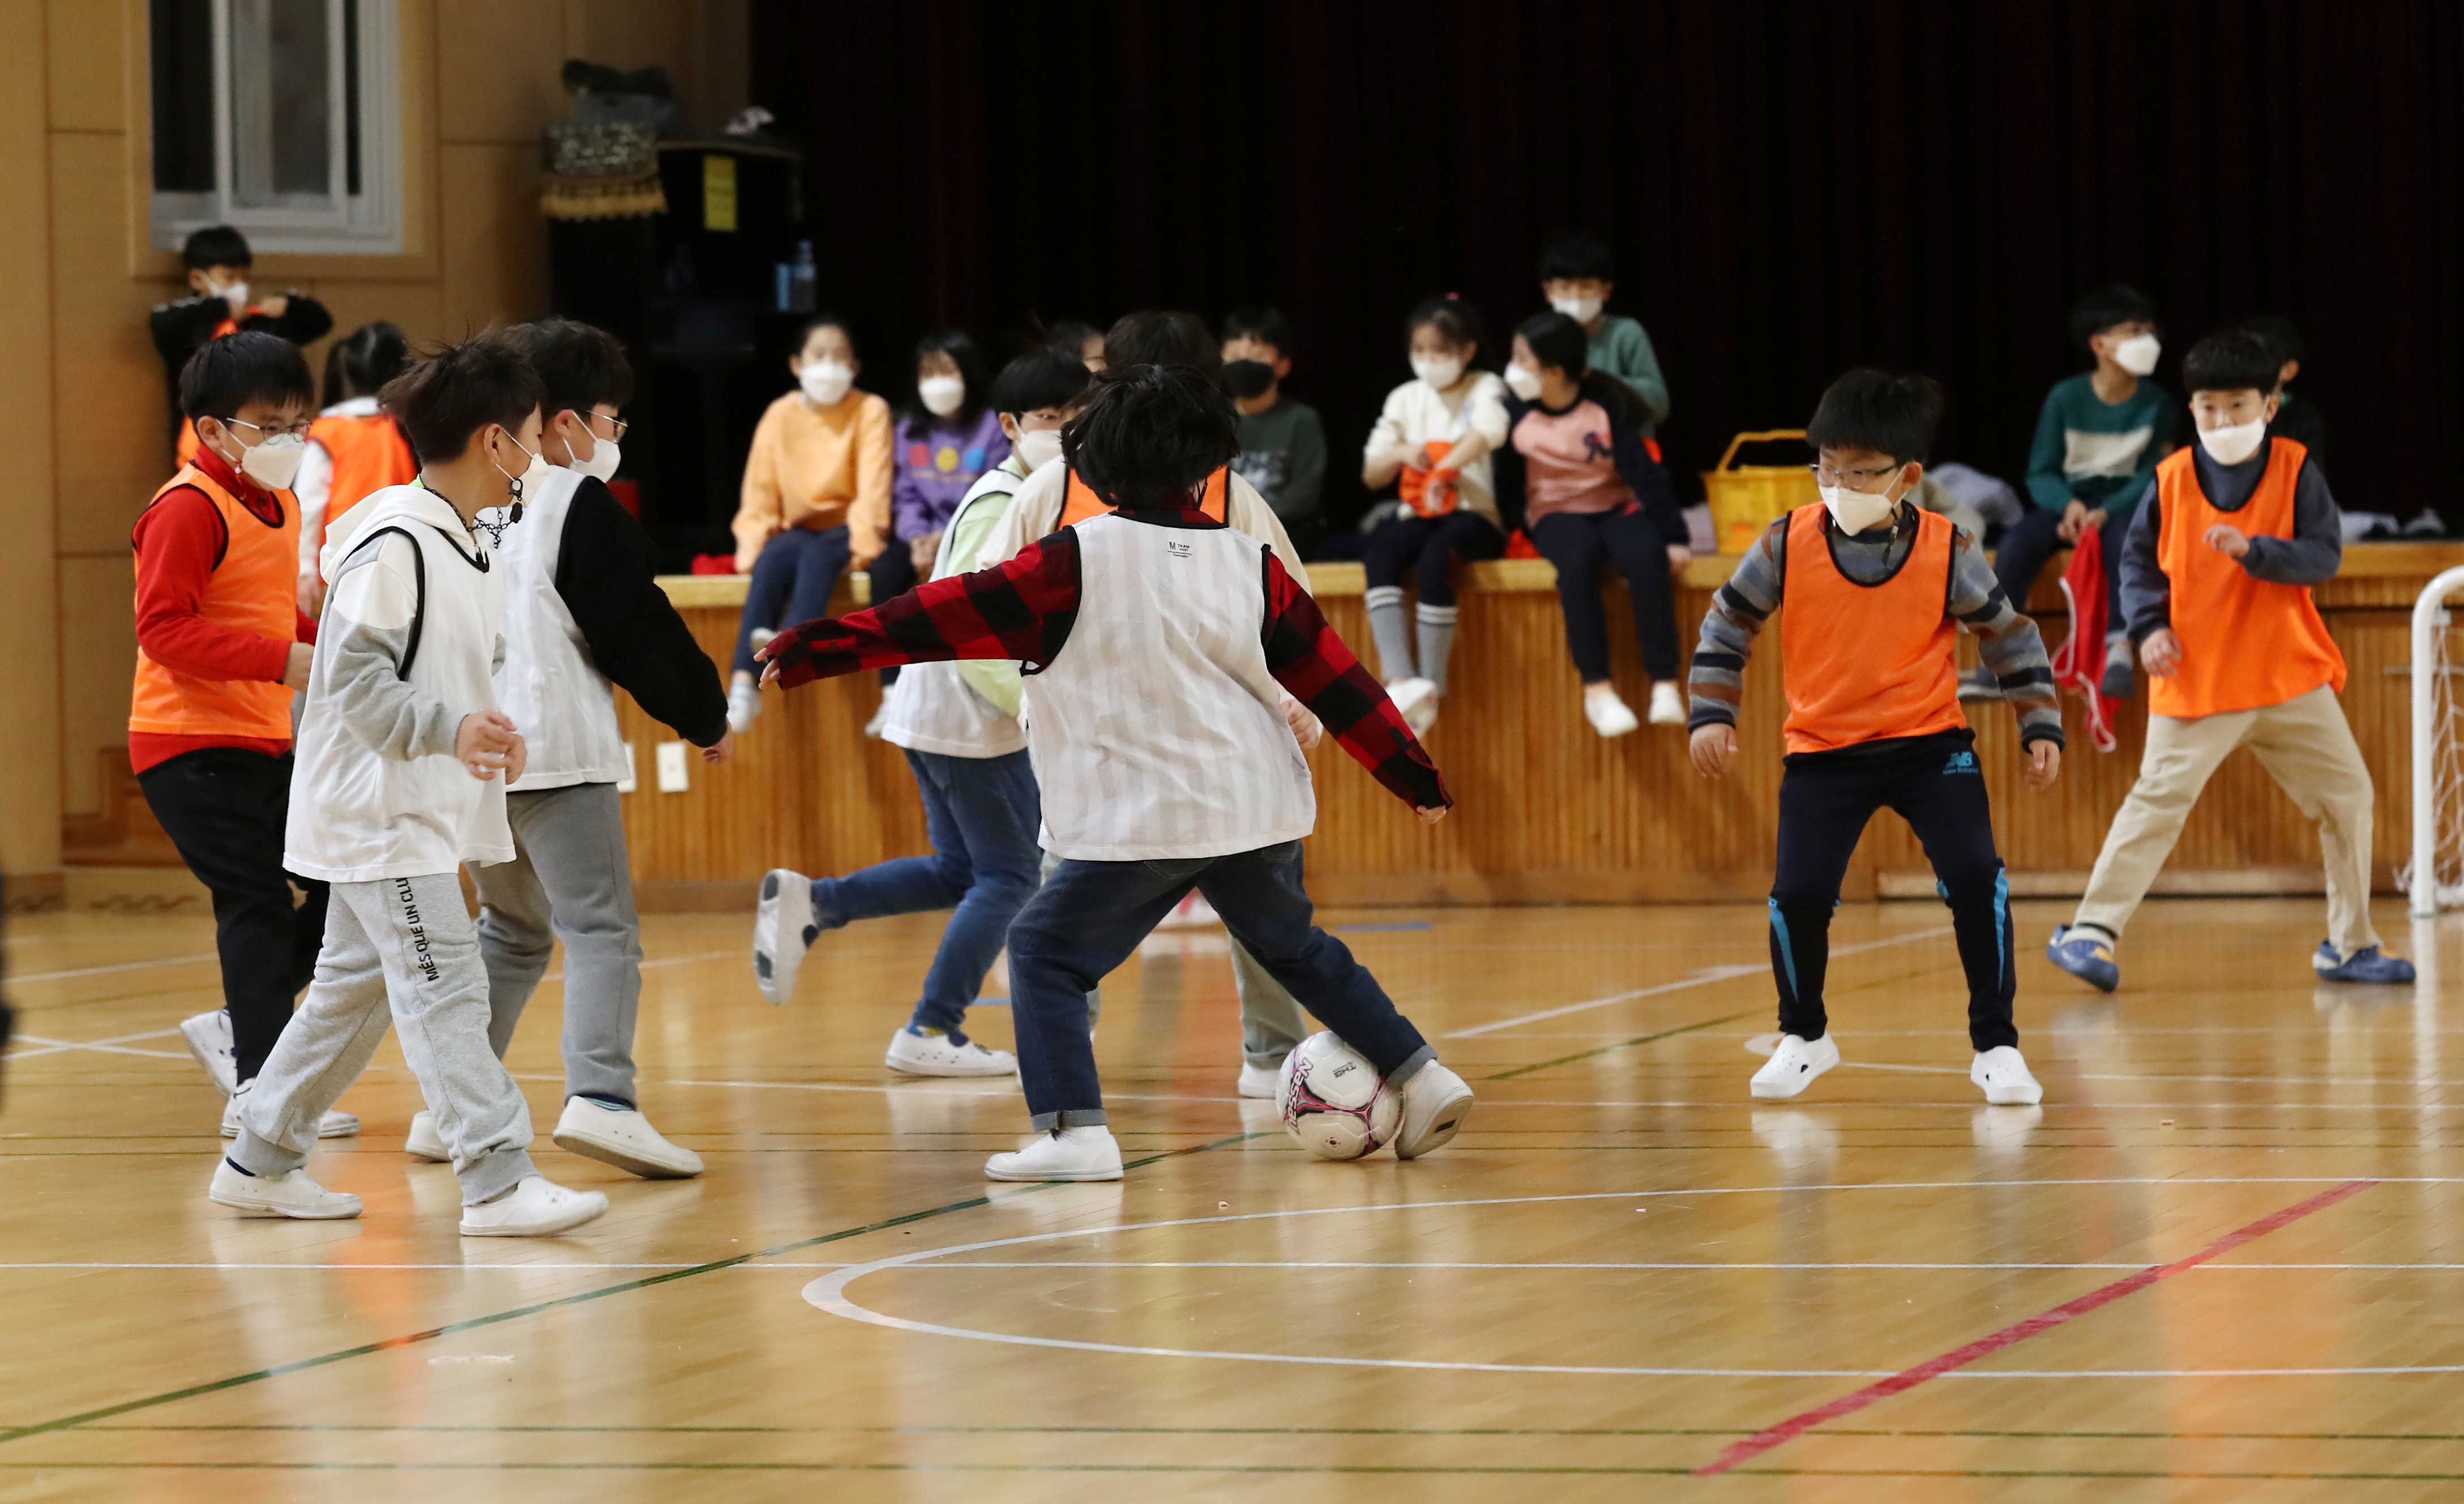 korean elementary school